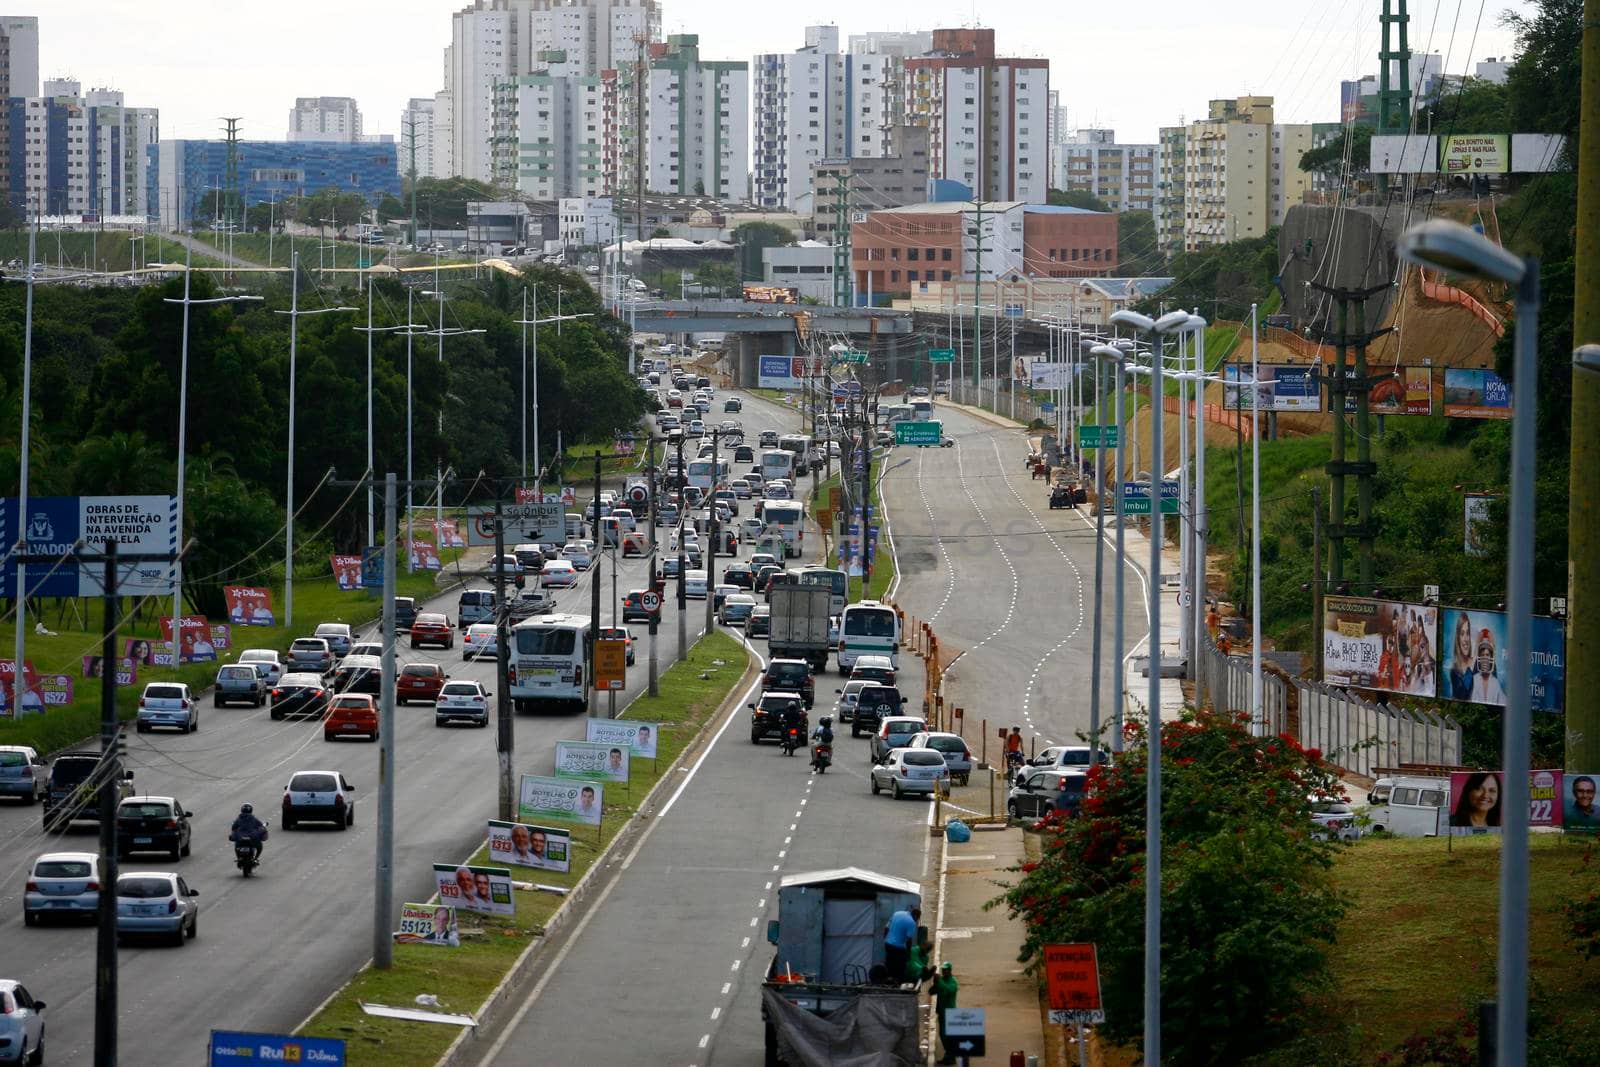 salvador, bahia, brazil - august 12, 2014: Vehicle congestion on Avenida Luiz Viana in the city of Salvador.